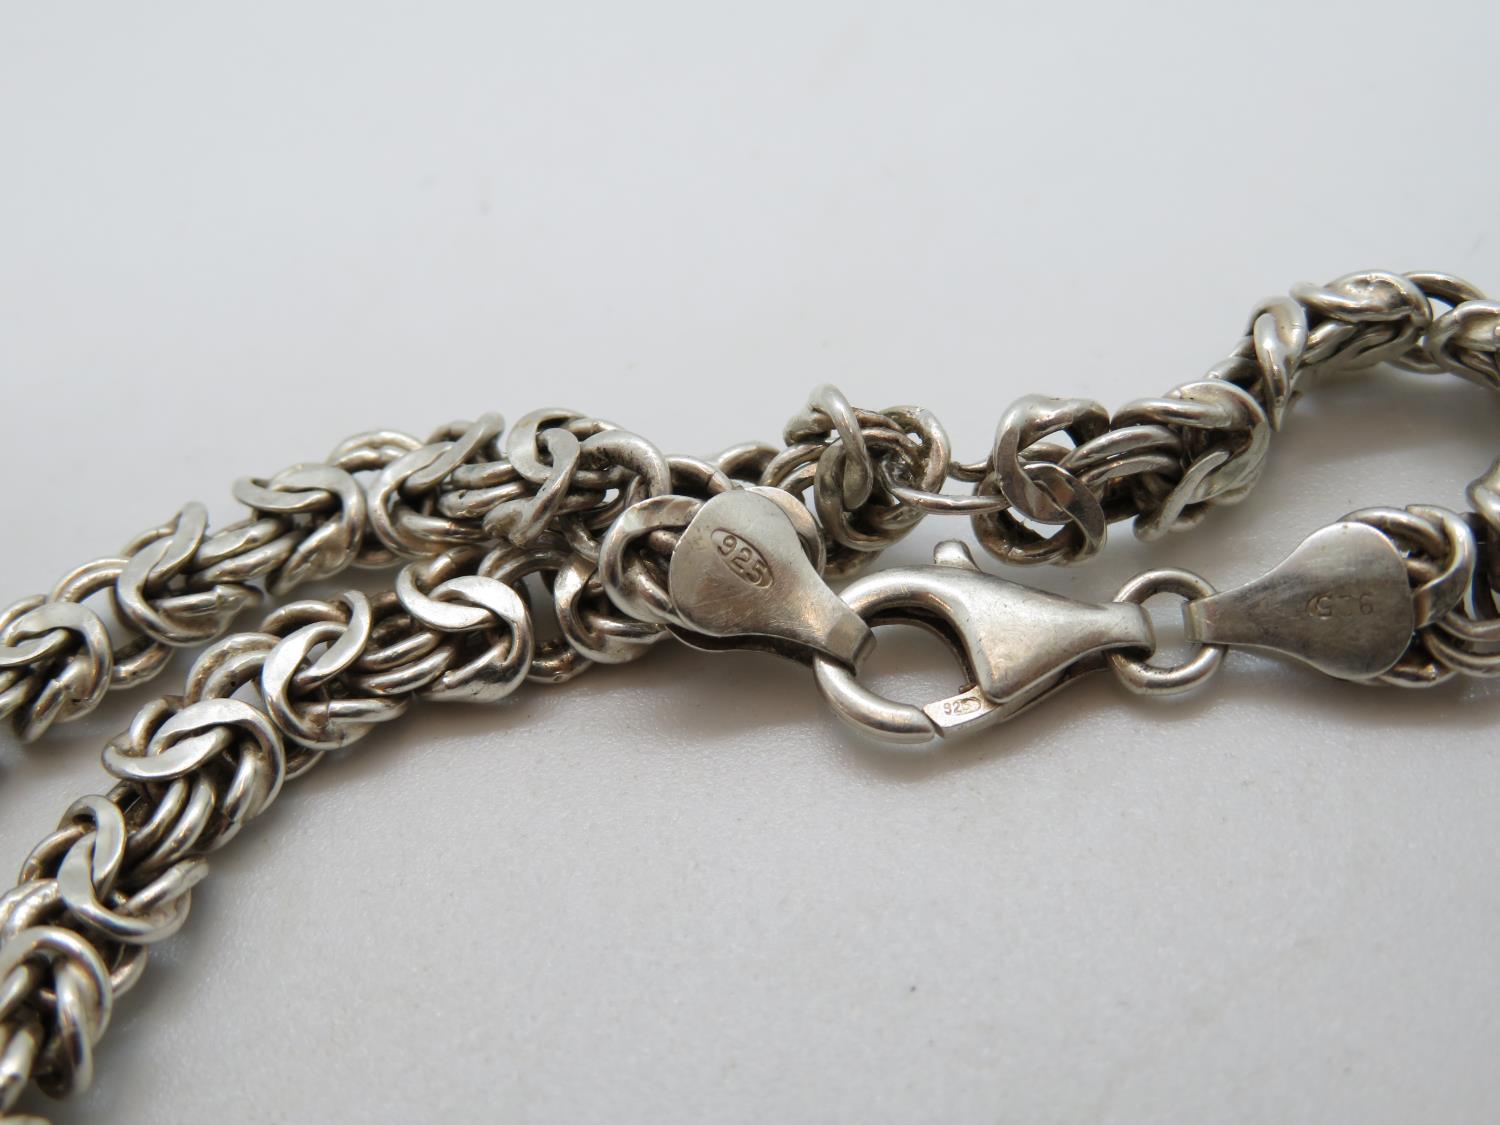 8.5g silver bracelet - Image 3 of 3